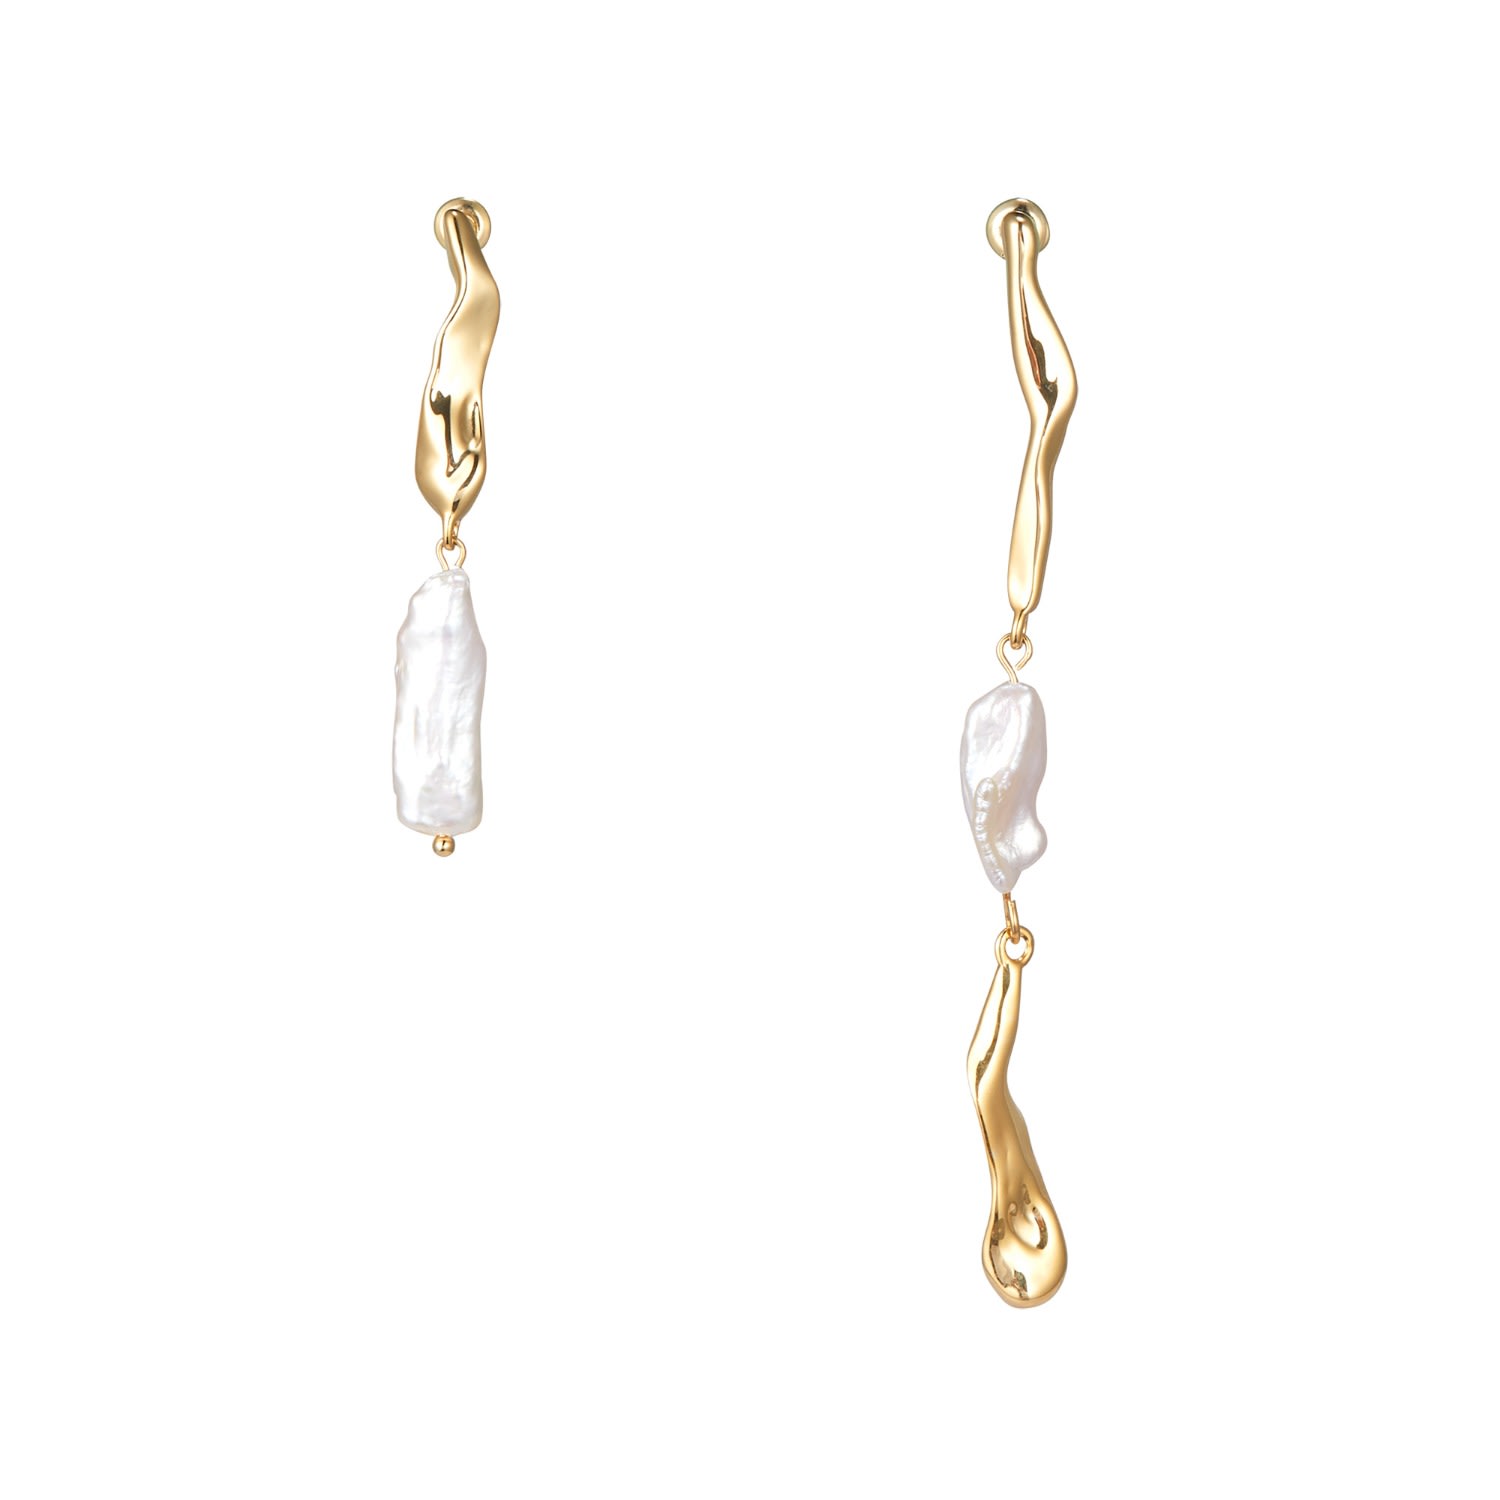 Shop Classicharms Women's Gold Asymmetrical Molten Baroque Pearl Earrings